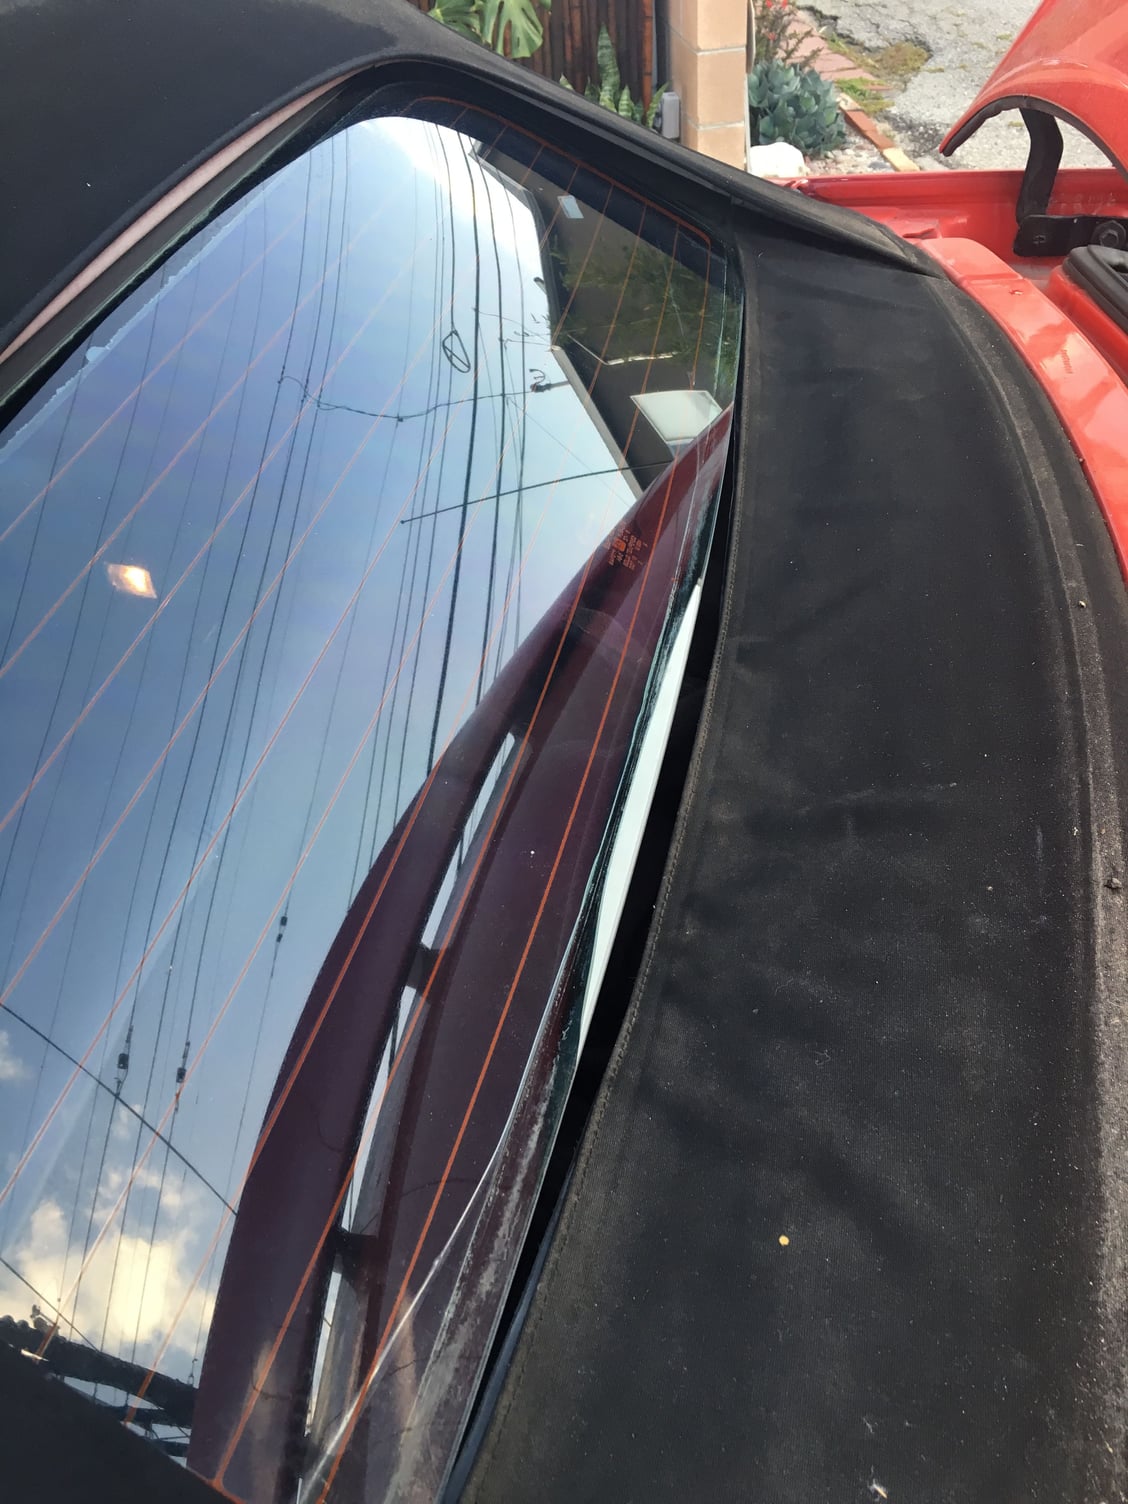 Convertible Top Rear Window Leather Zipper Pull - Dead Nuts On